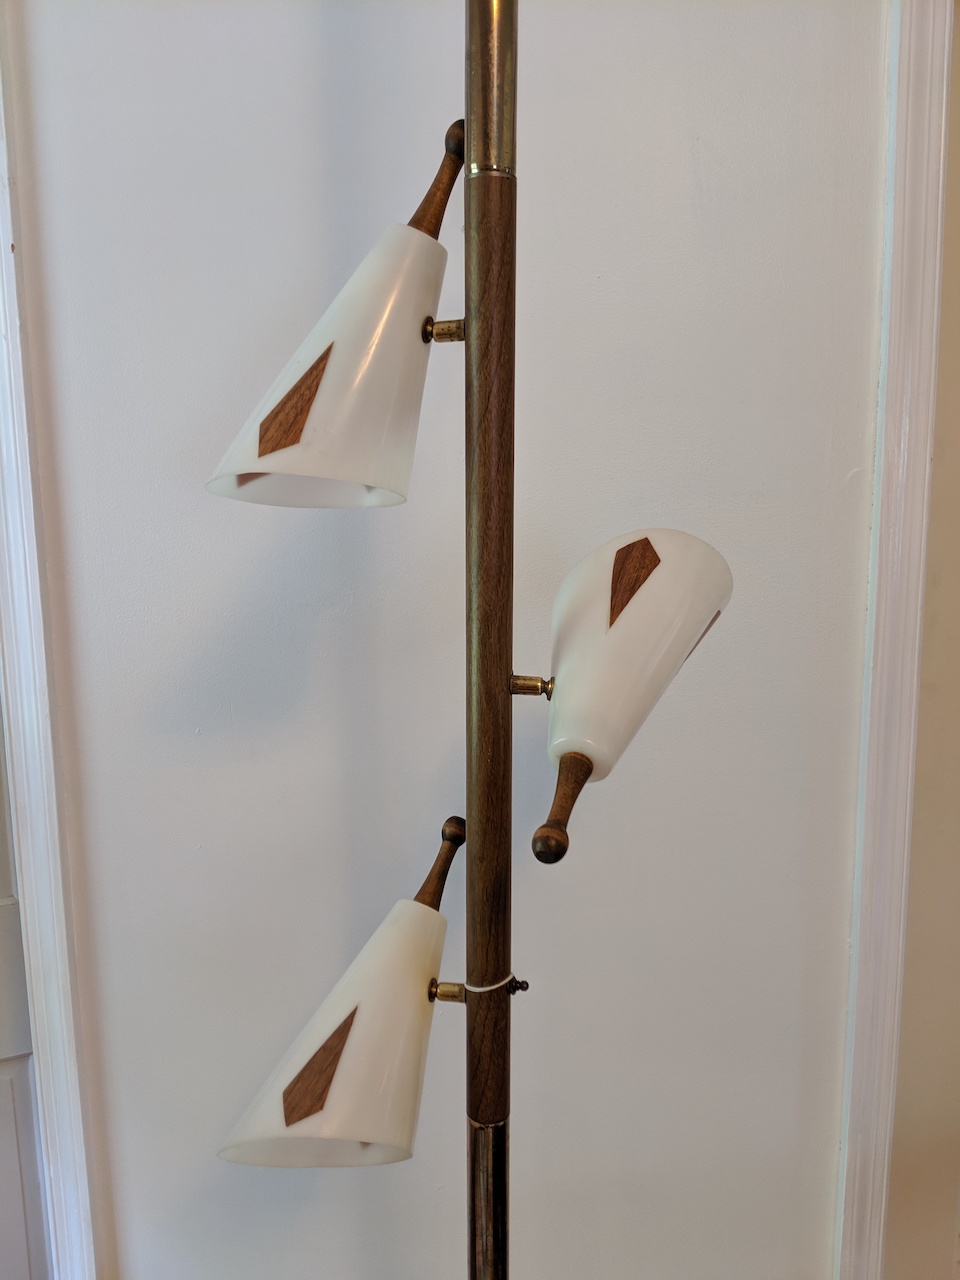 https://epochfurnishings.com/wp-content/uploads/2019/05/vintage-mid-century-modern-tension-rod-pole-lamp-inlaid-veneer-07.jpg